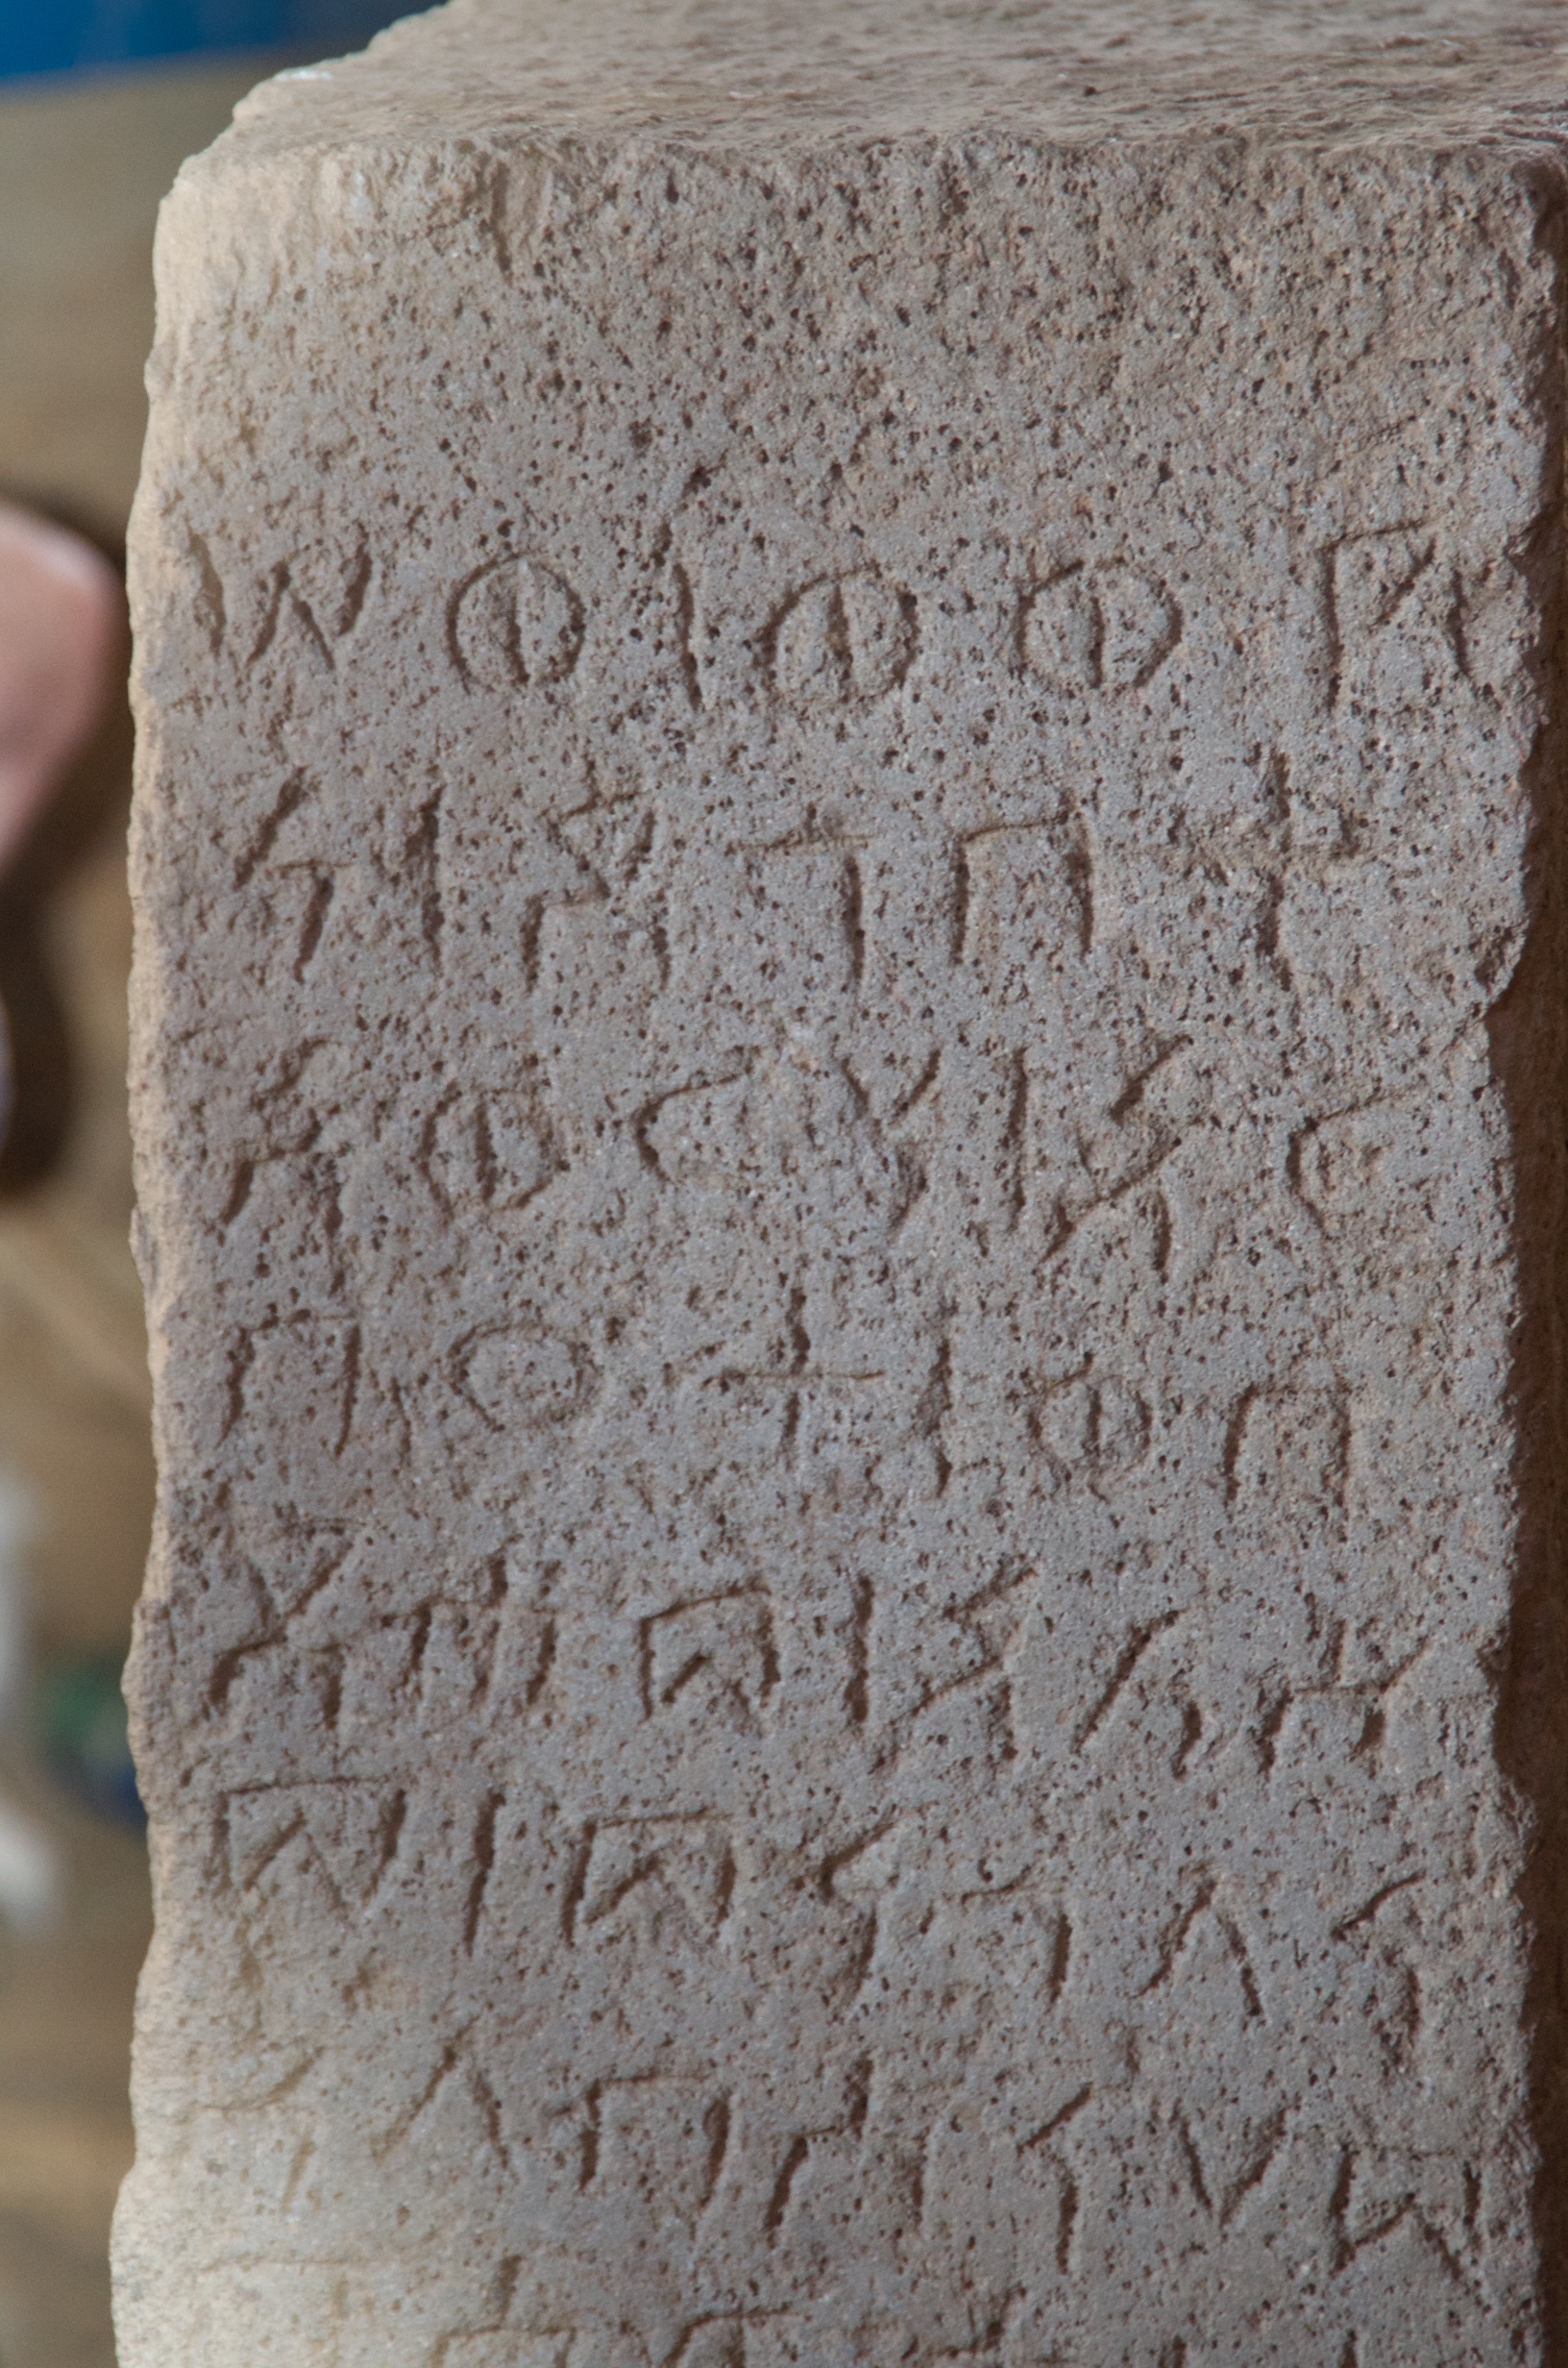  Part of Enzana inscription, Axum 